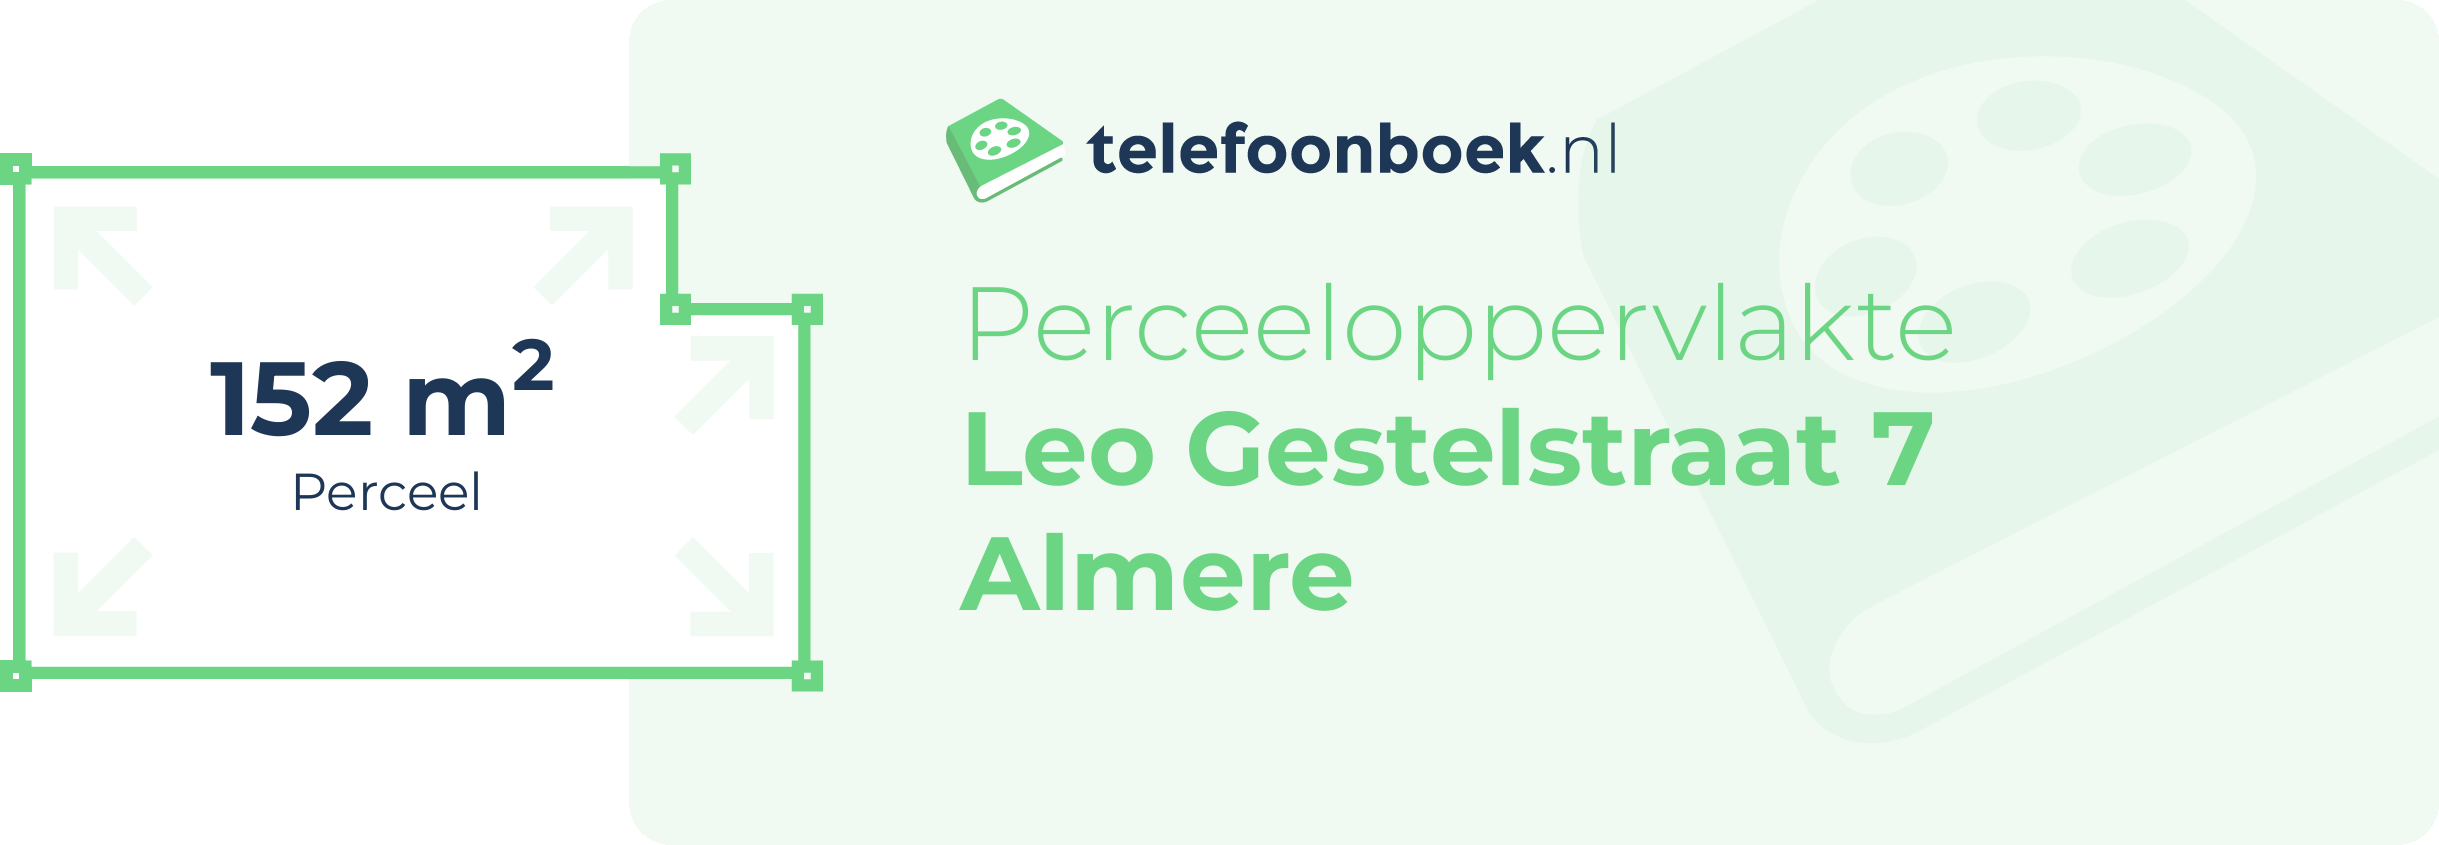 Perceeloppervlakte Leo Gestelstraat 7 Almere